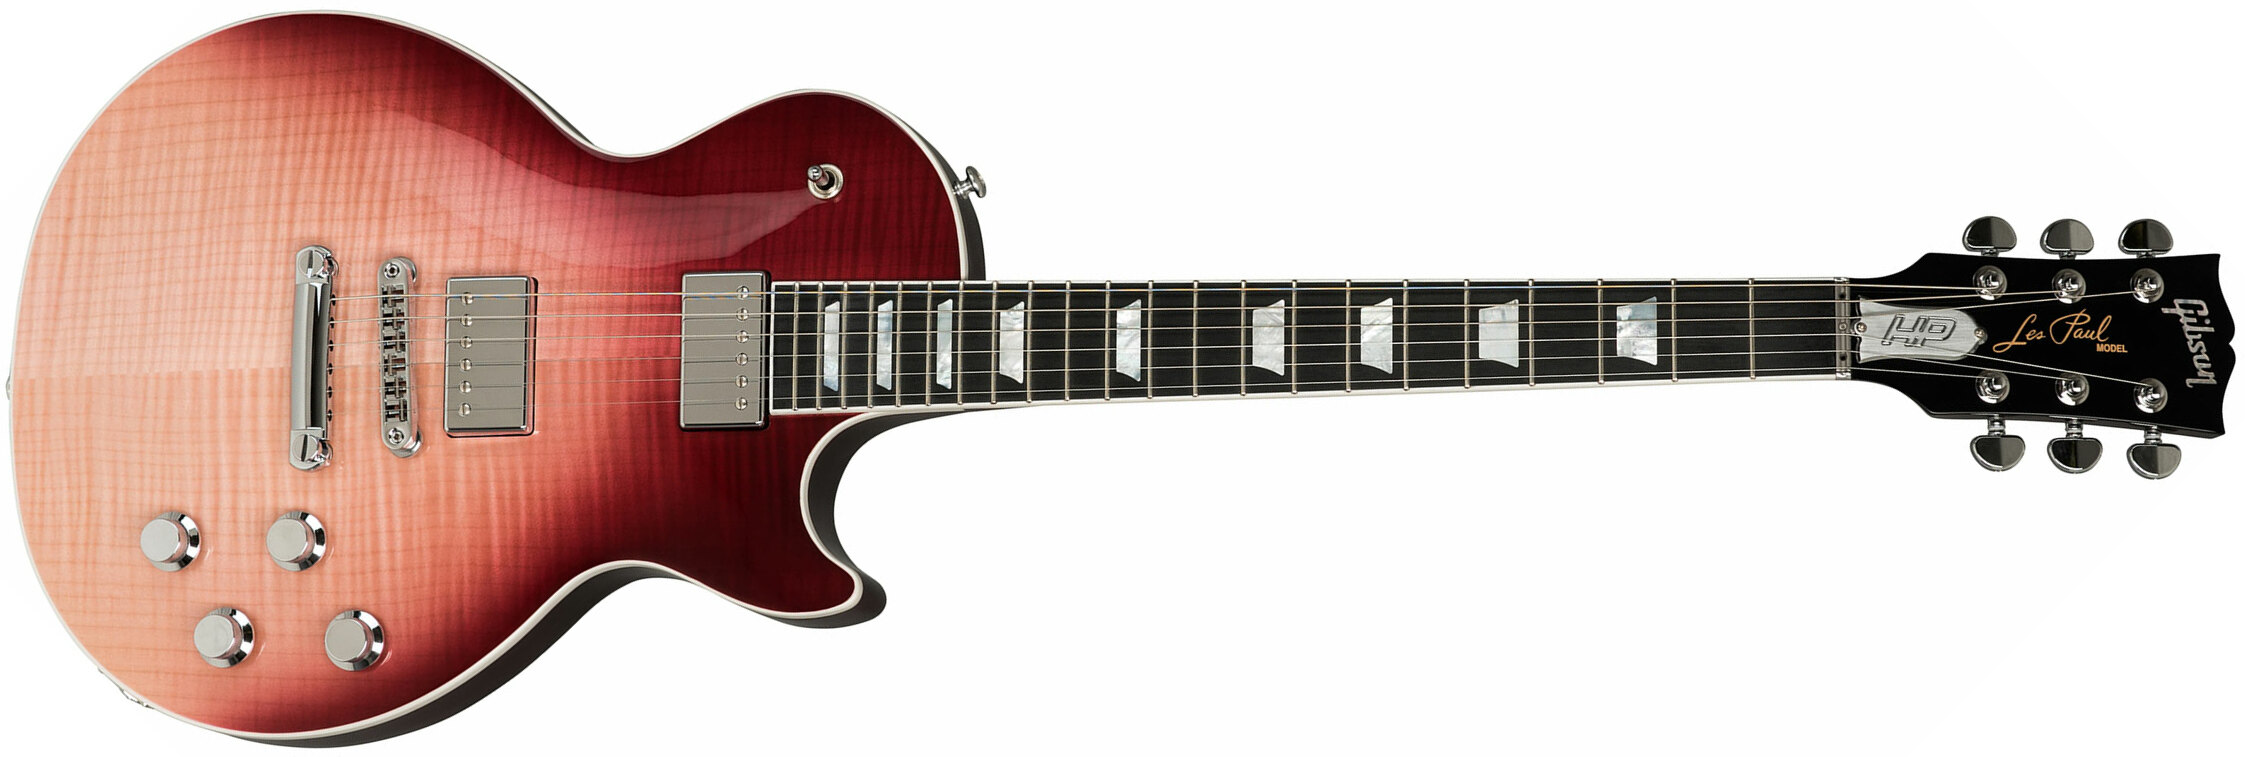 Gibson Les Paul Standard Hp-ii 2018 2h Ht Ric - Hot Pink Fade - Single cut electric guitar - Main picture